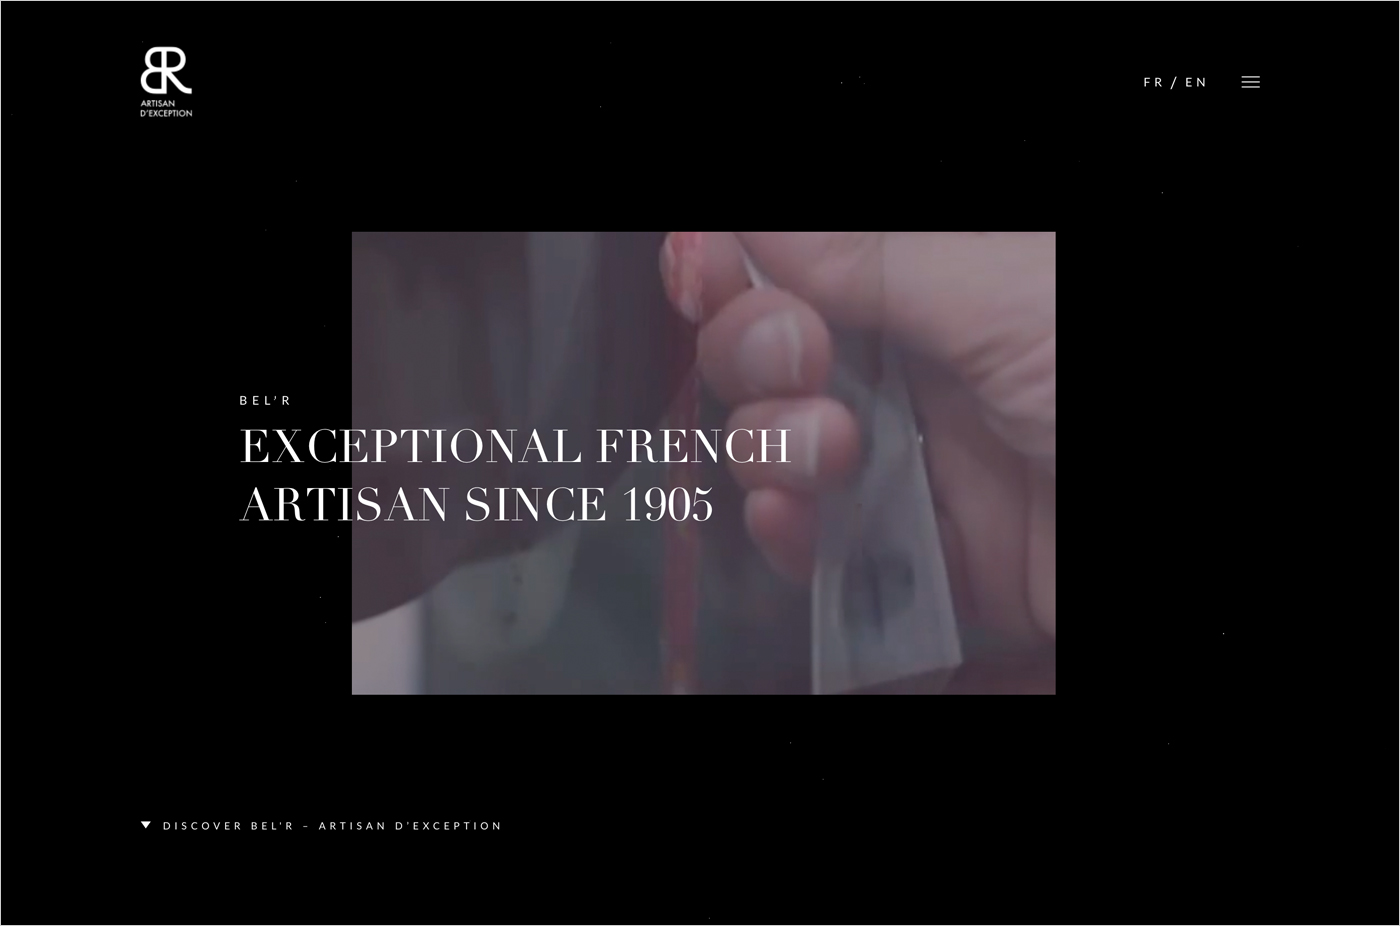 Exceptional French artisan since 1905 | Satab Bel’R enウェブサイトの画面キャプチャ画像